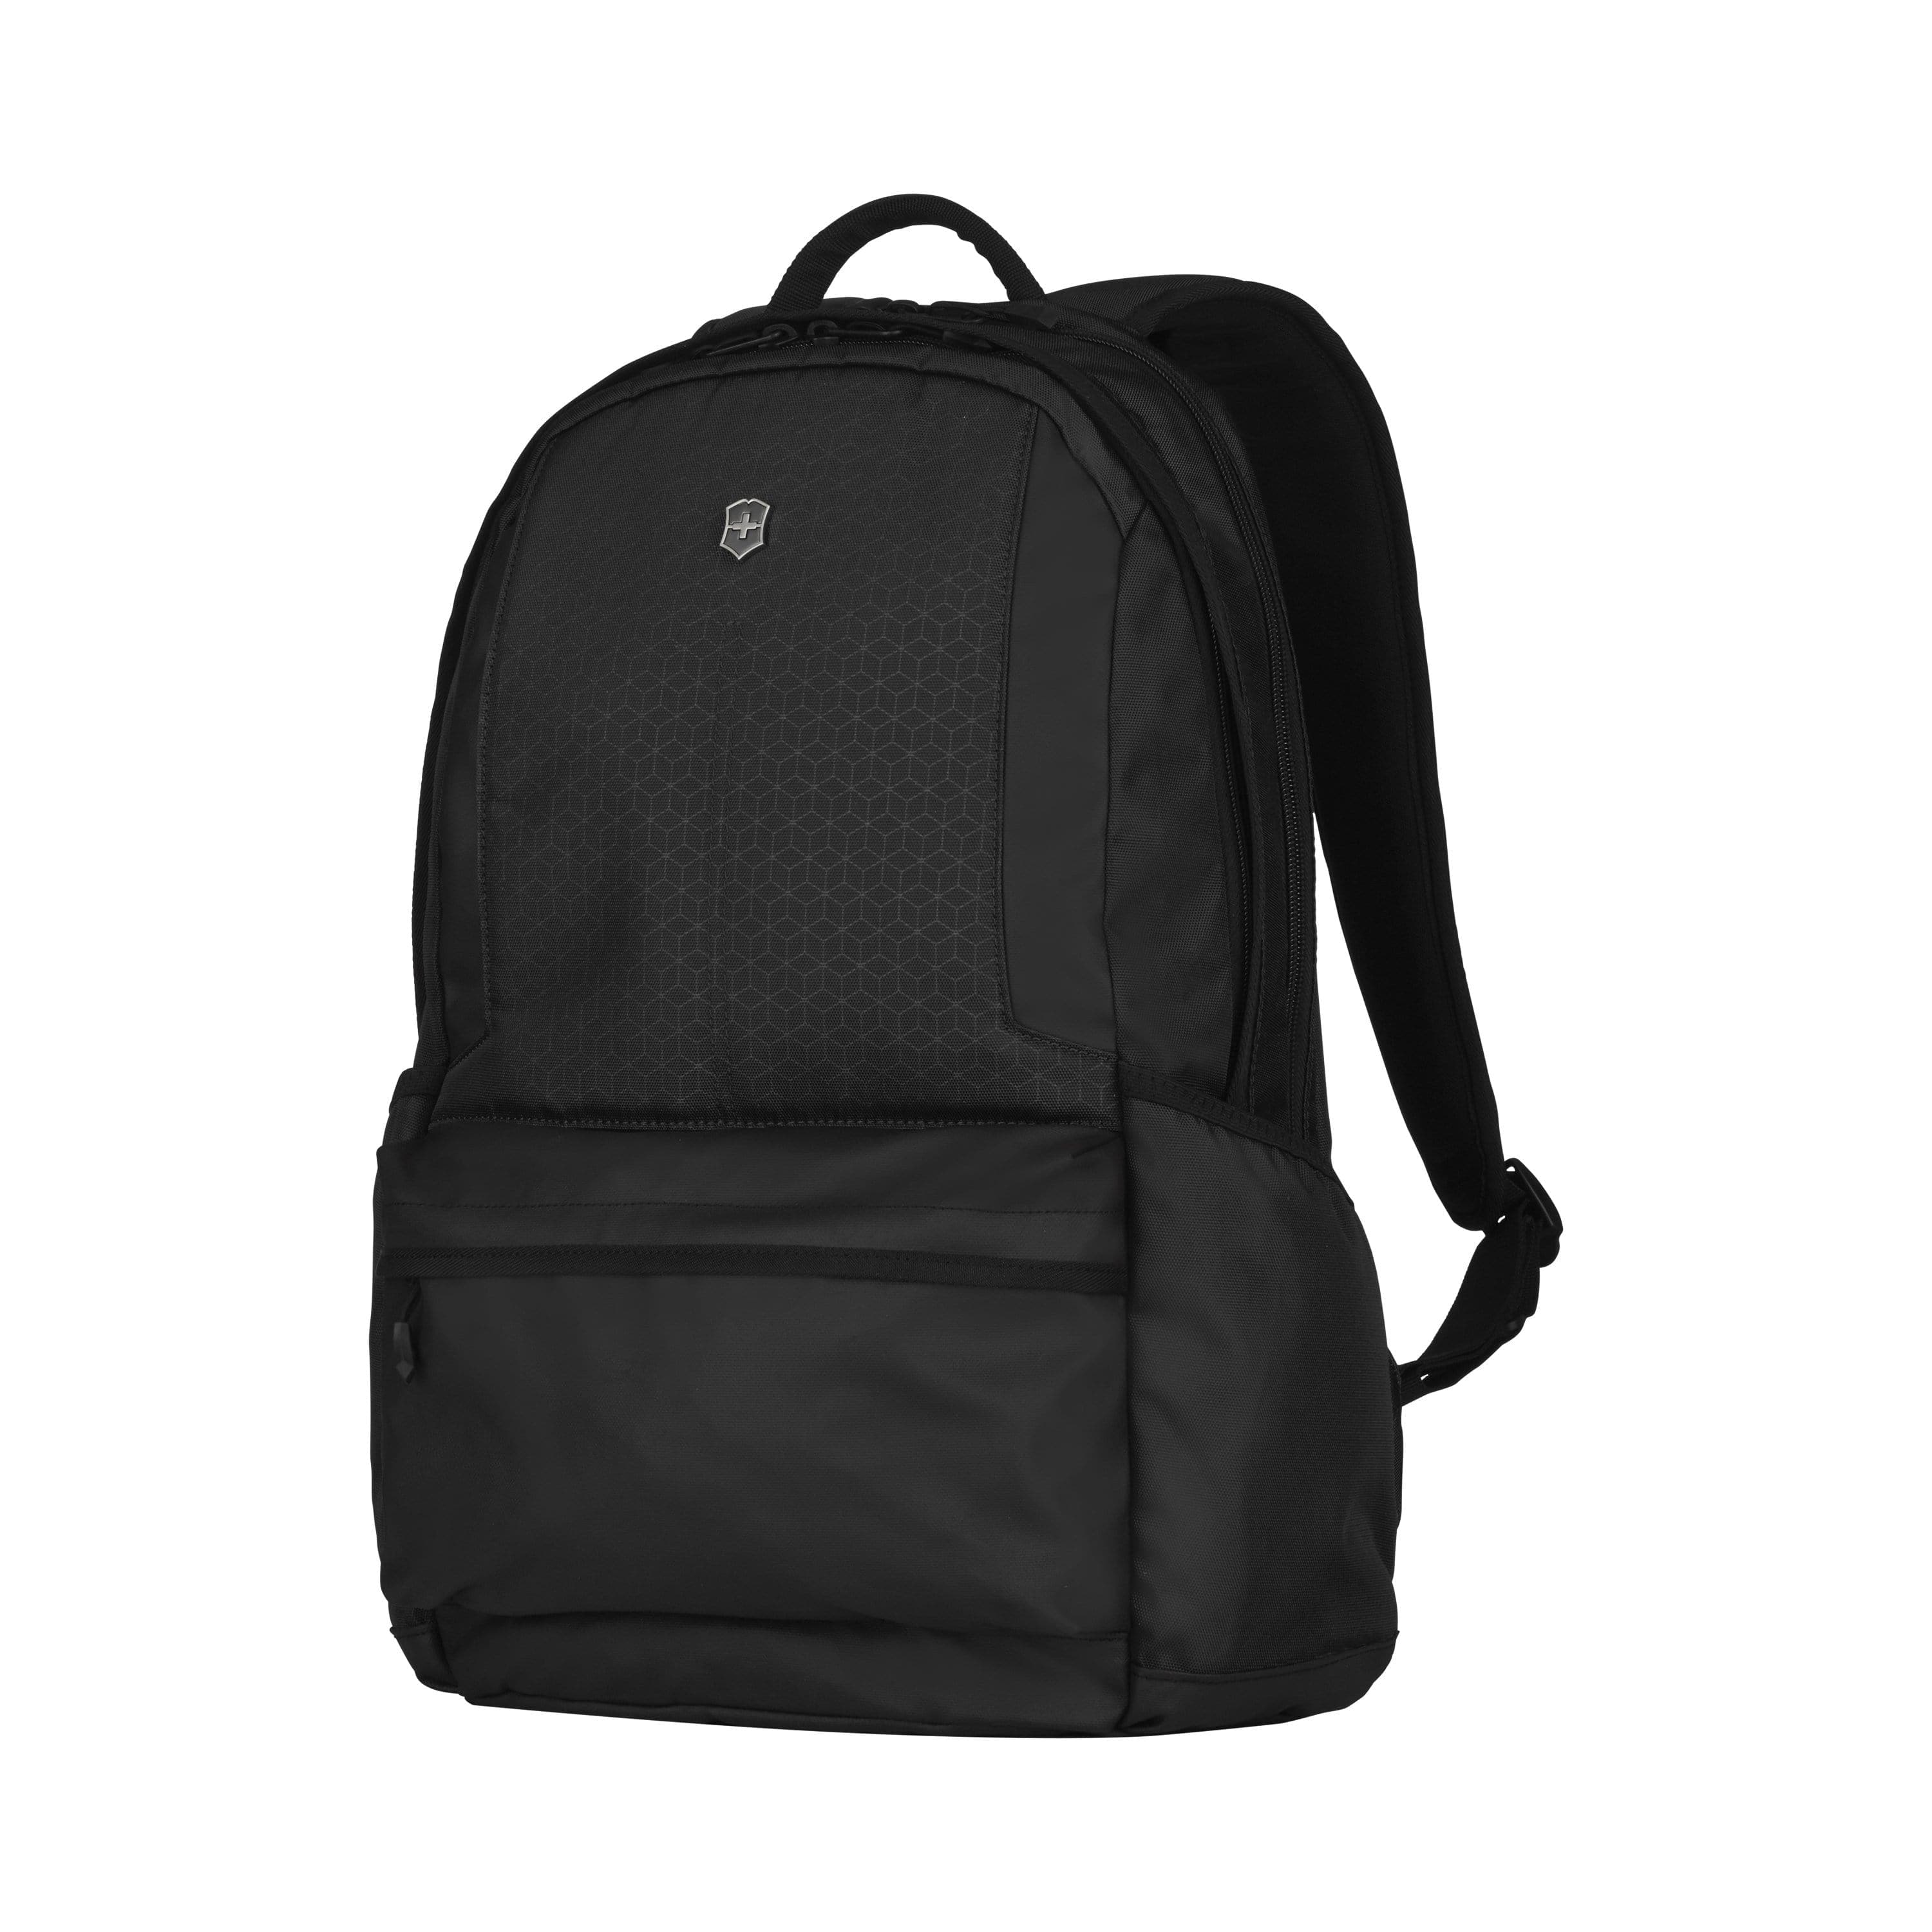 Victorinox Altmont Original 17 inch Laptop Backpack Black - 606742